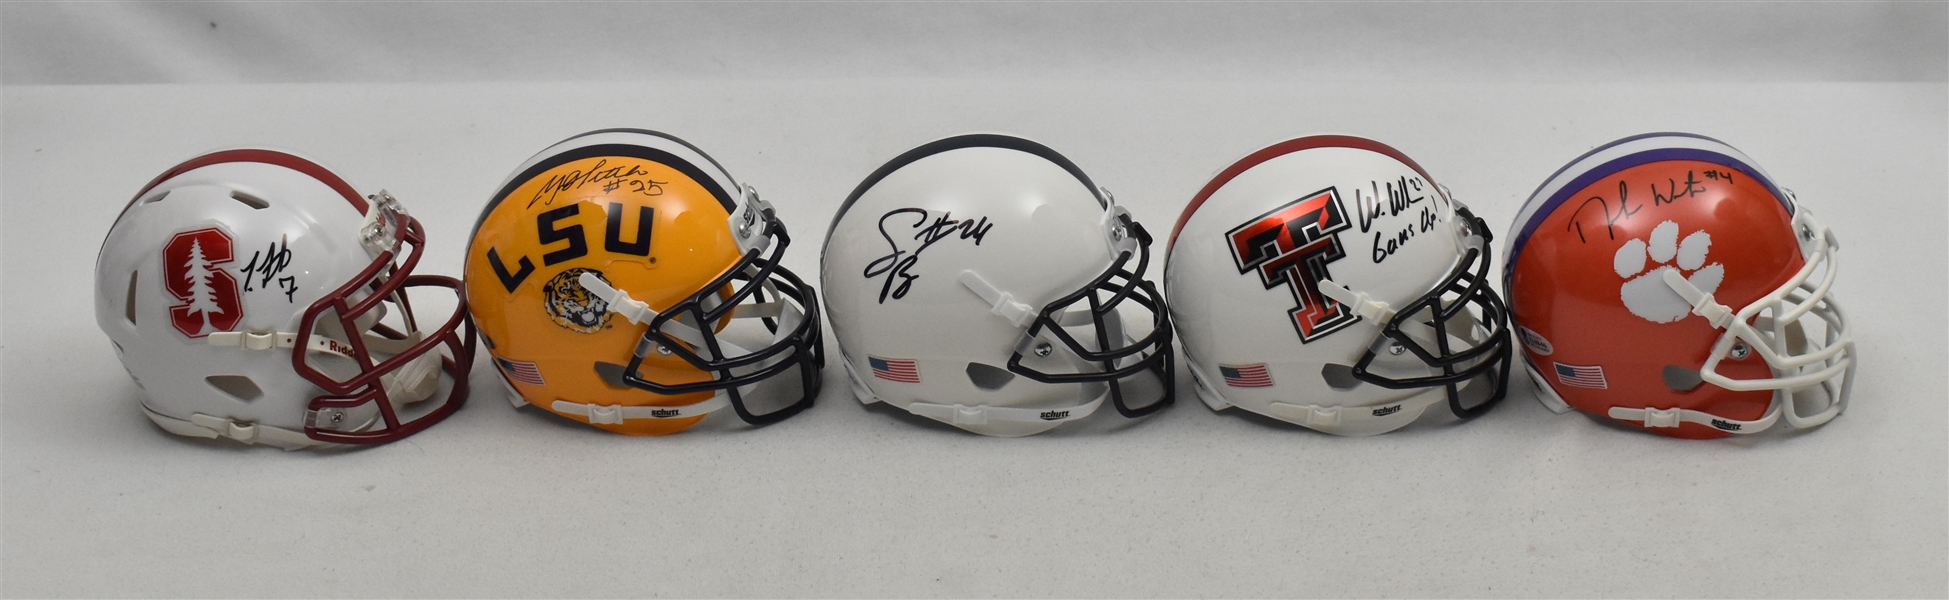 Lot of 5 Autographed NCAA Mini Helmets w/Deshaun Watson Saquon Barkley & Wes Welker